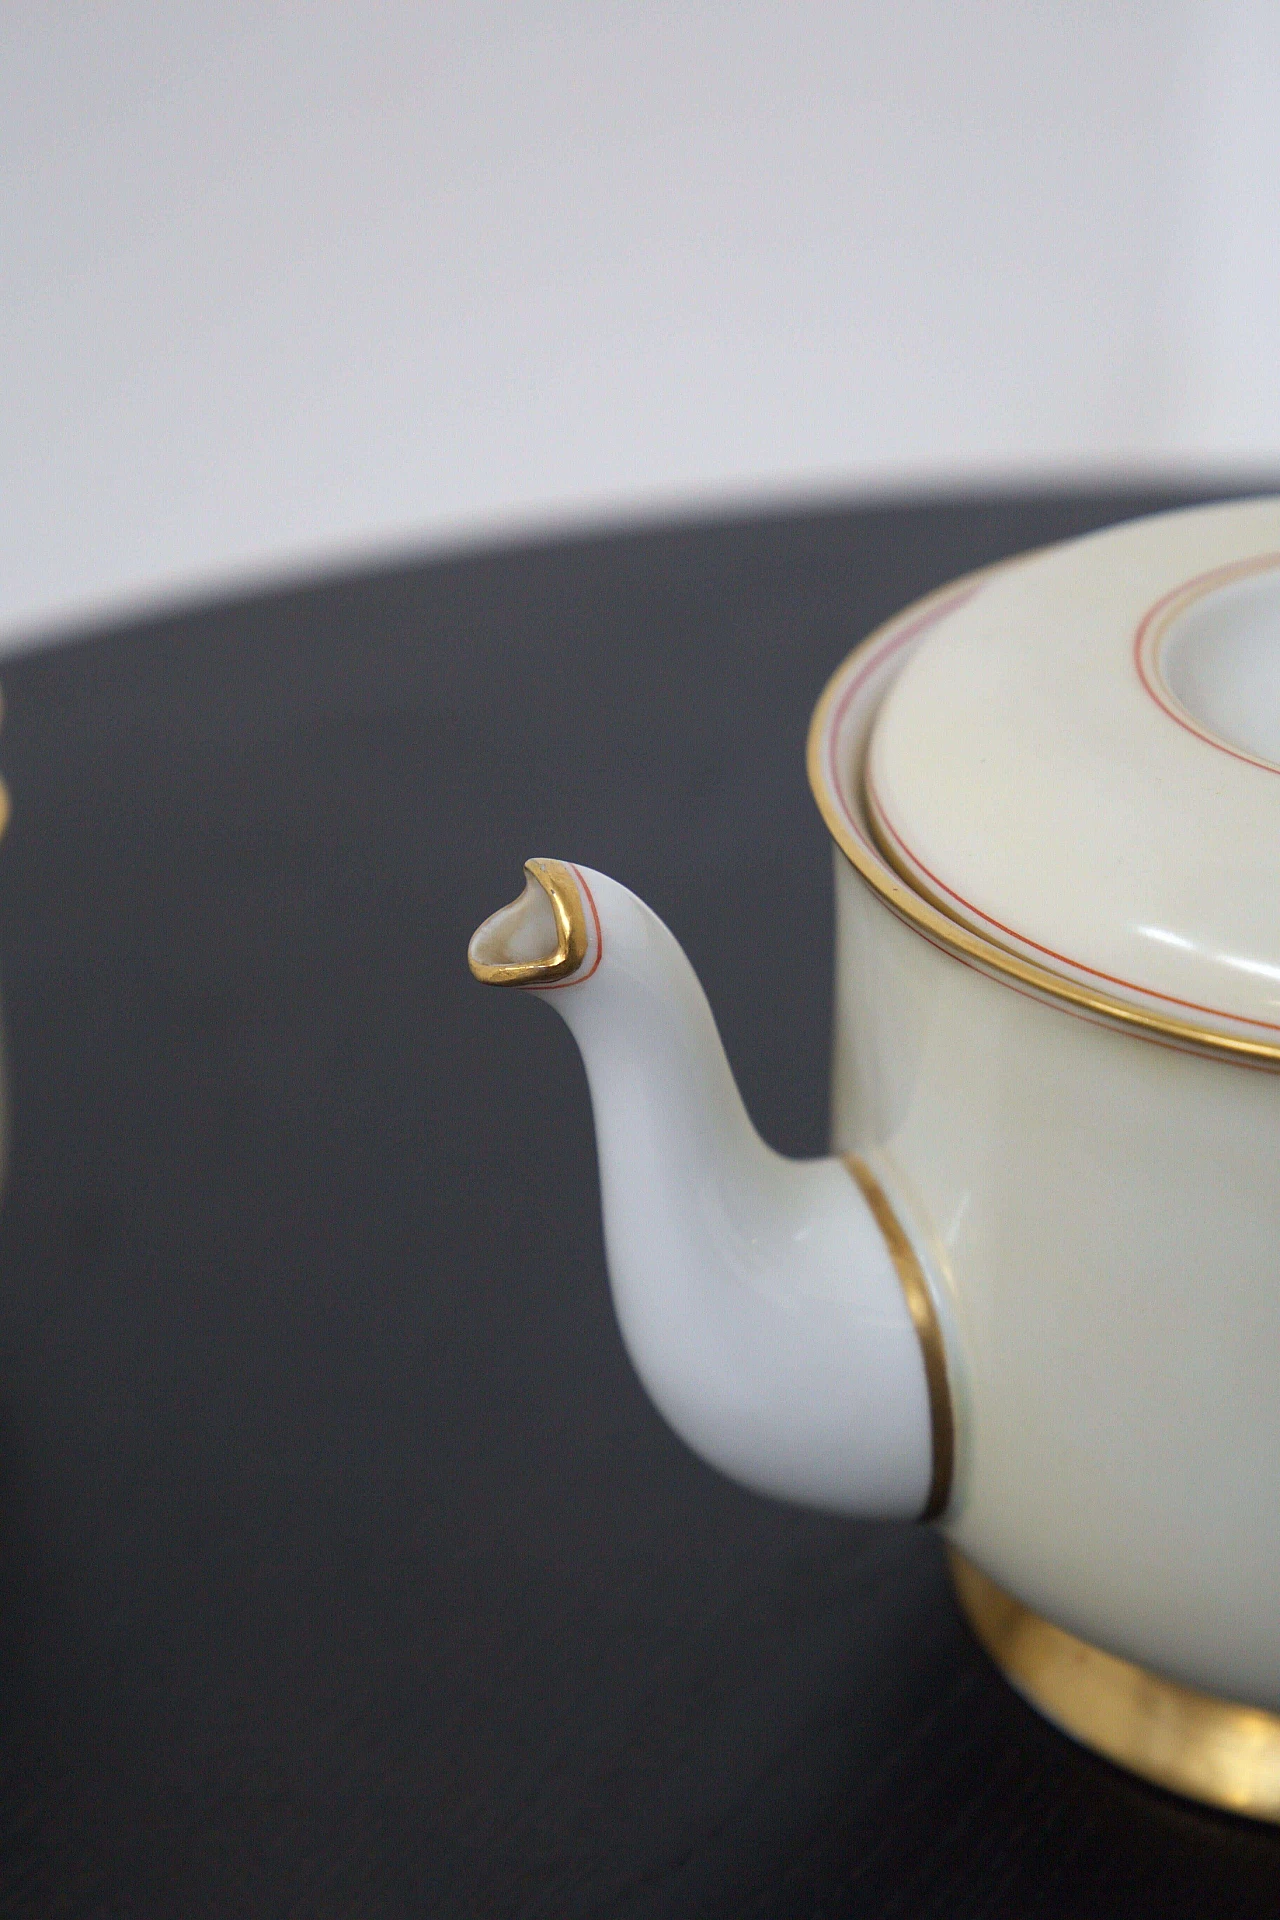 Ceramic and pure gold tea set by Gio Ponti for Ginori, 1930s 1477490